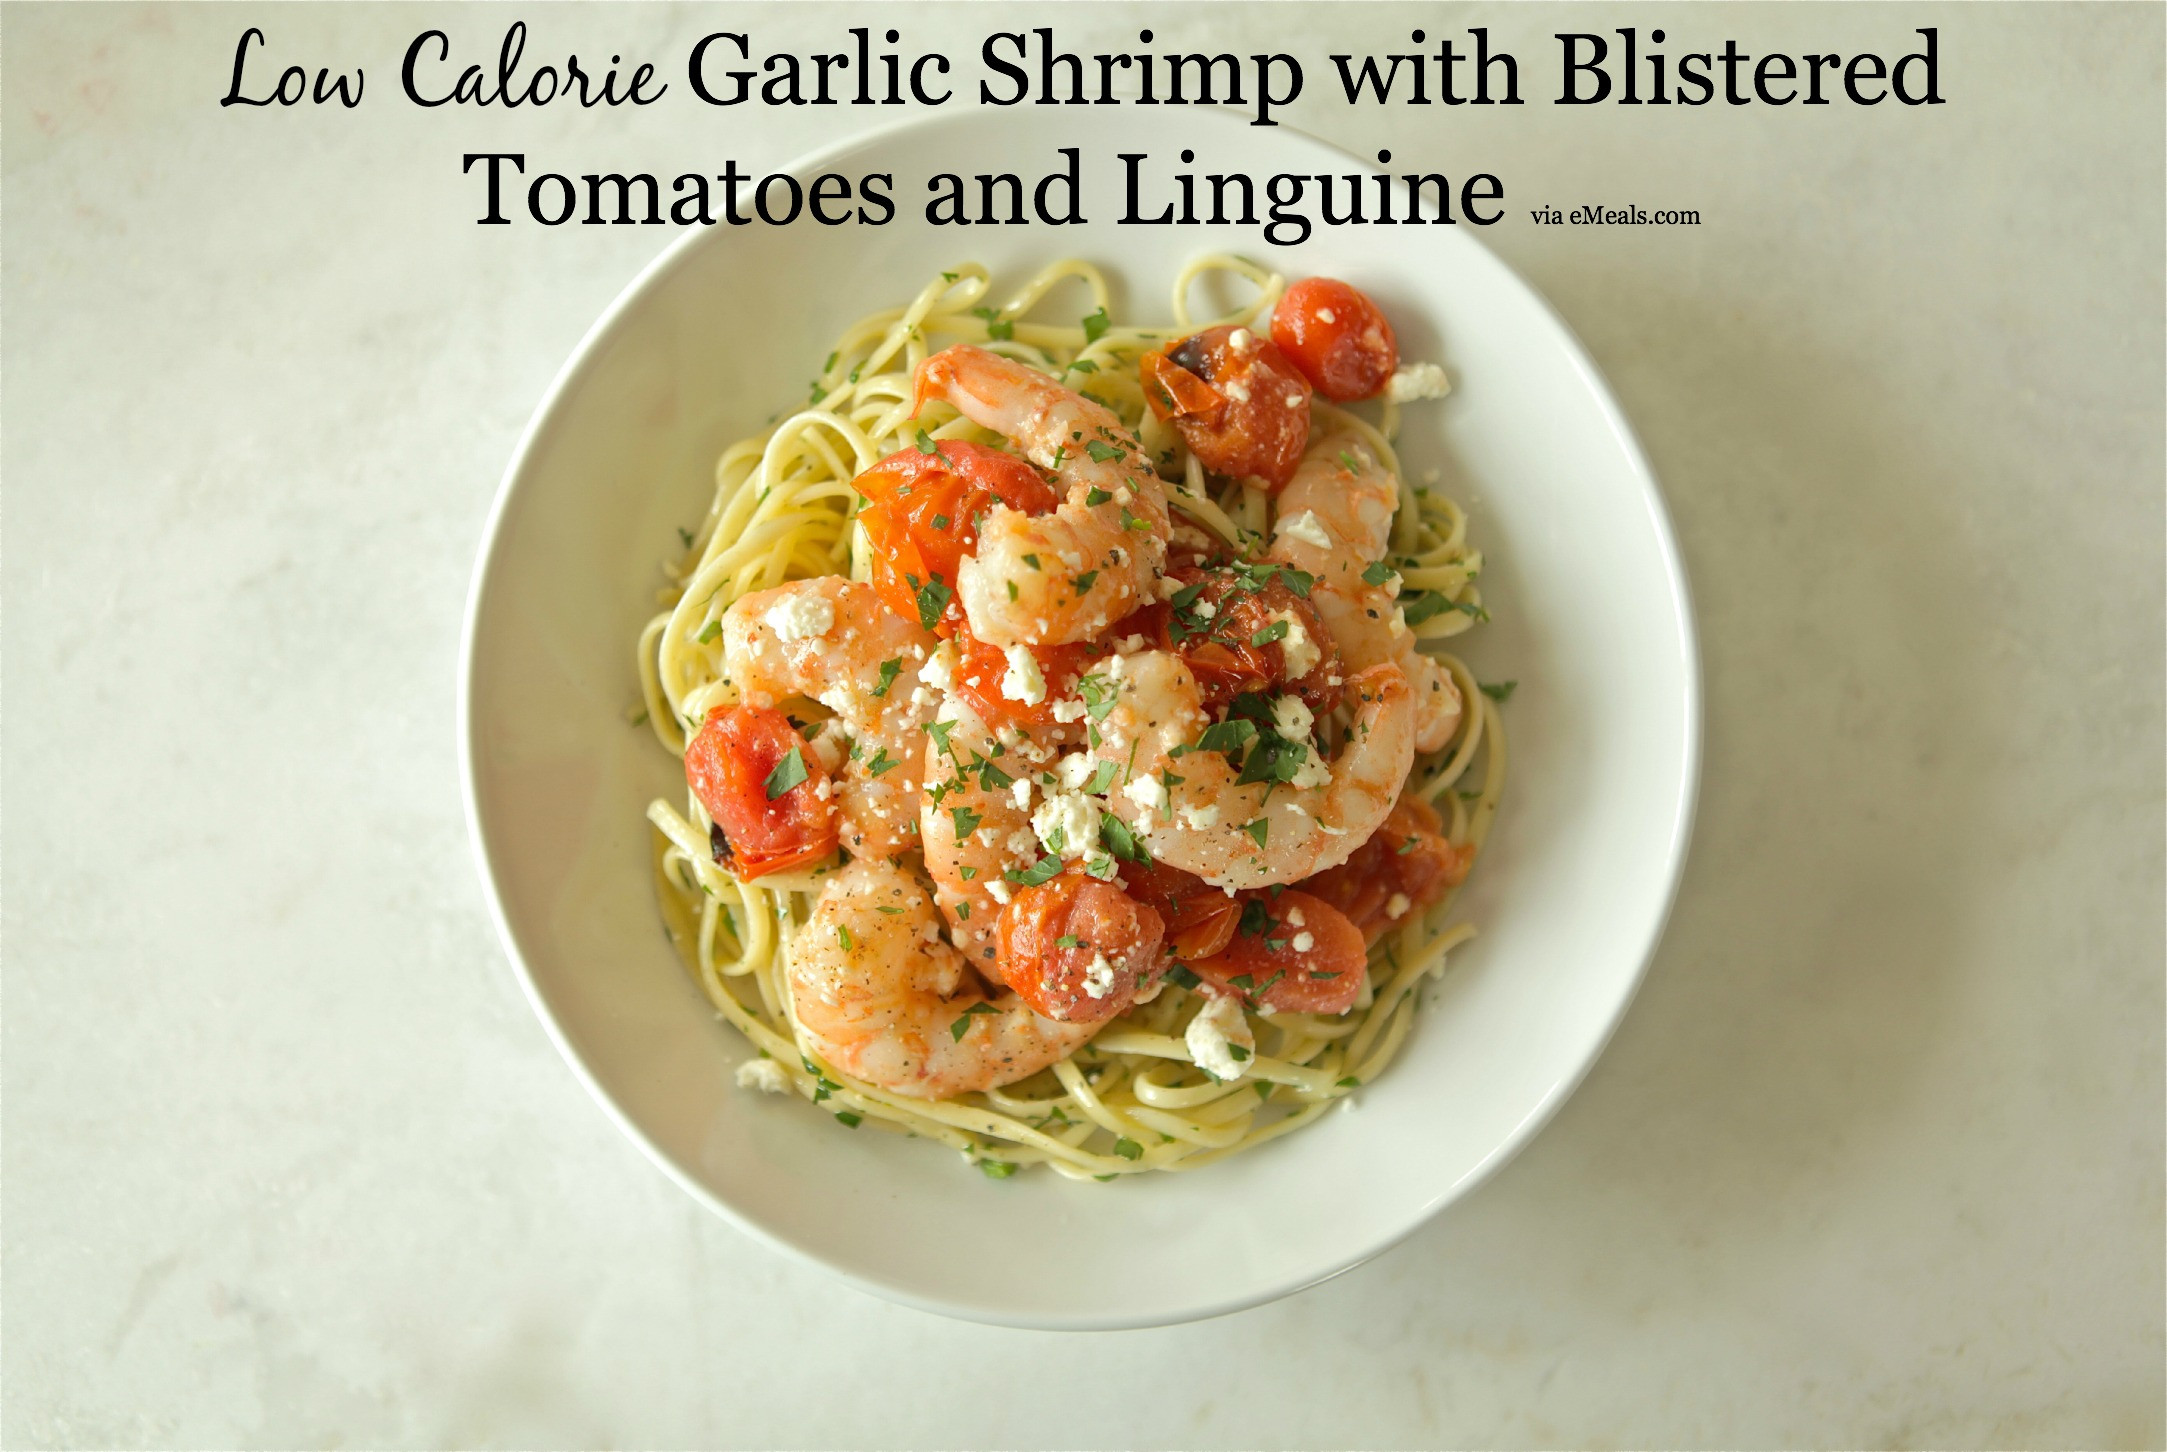 Low Calorie Shrimp Recipes
 Low Calorie Dinner Recipe Garlic Shrimp with Blistered